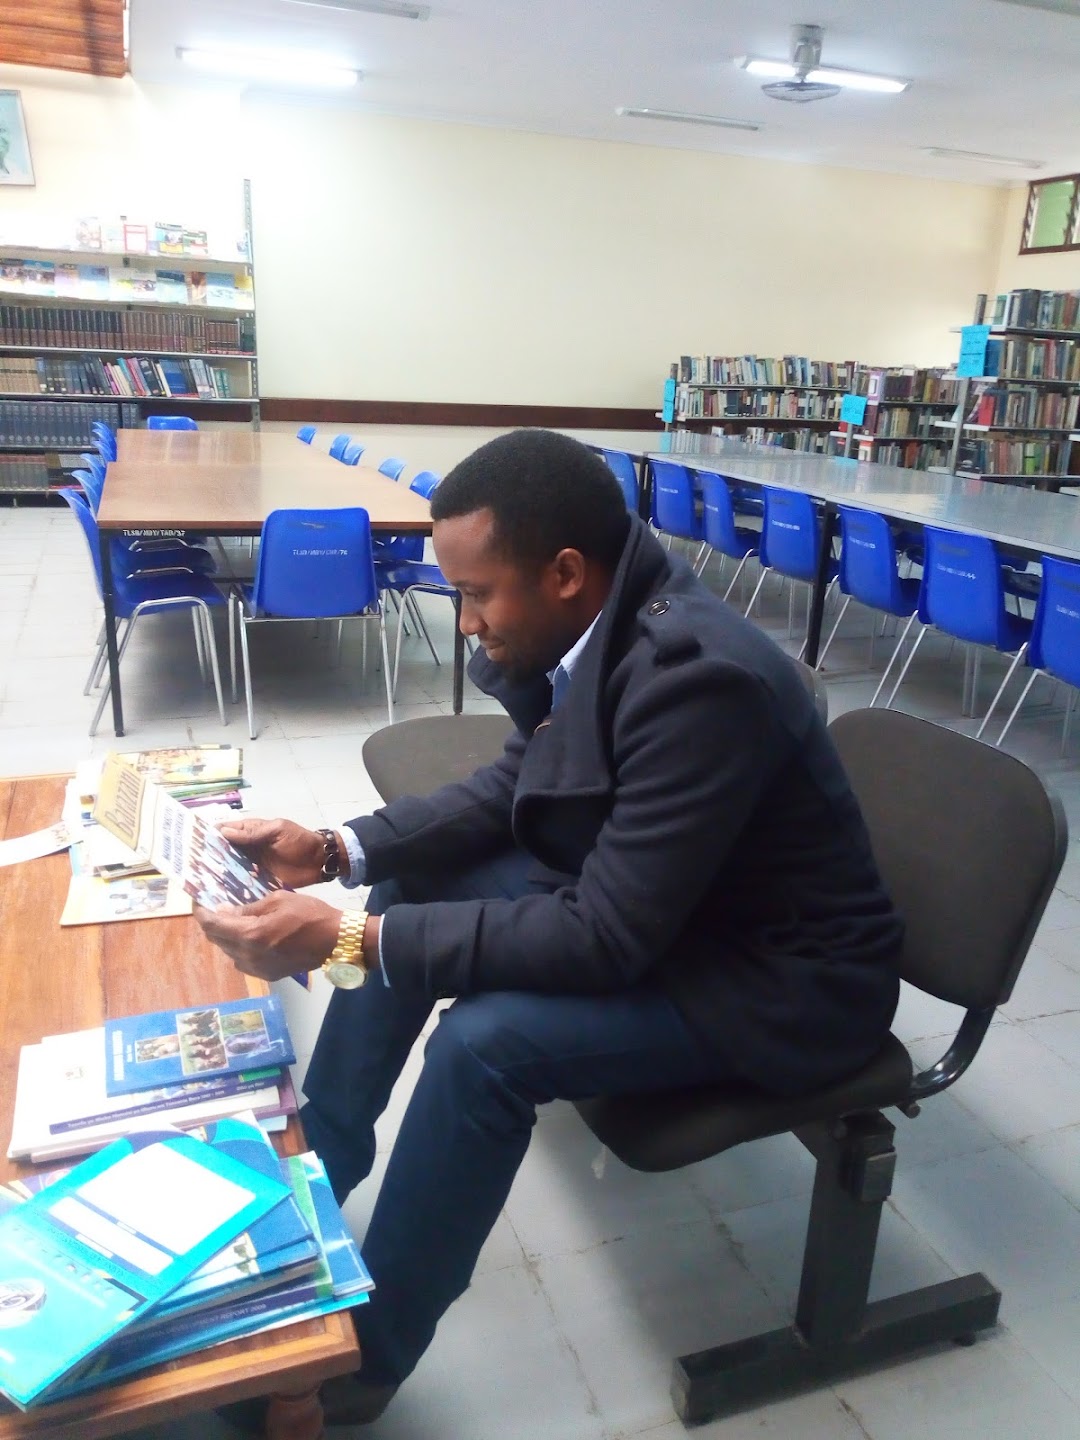 Mbeya Regional Library